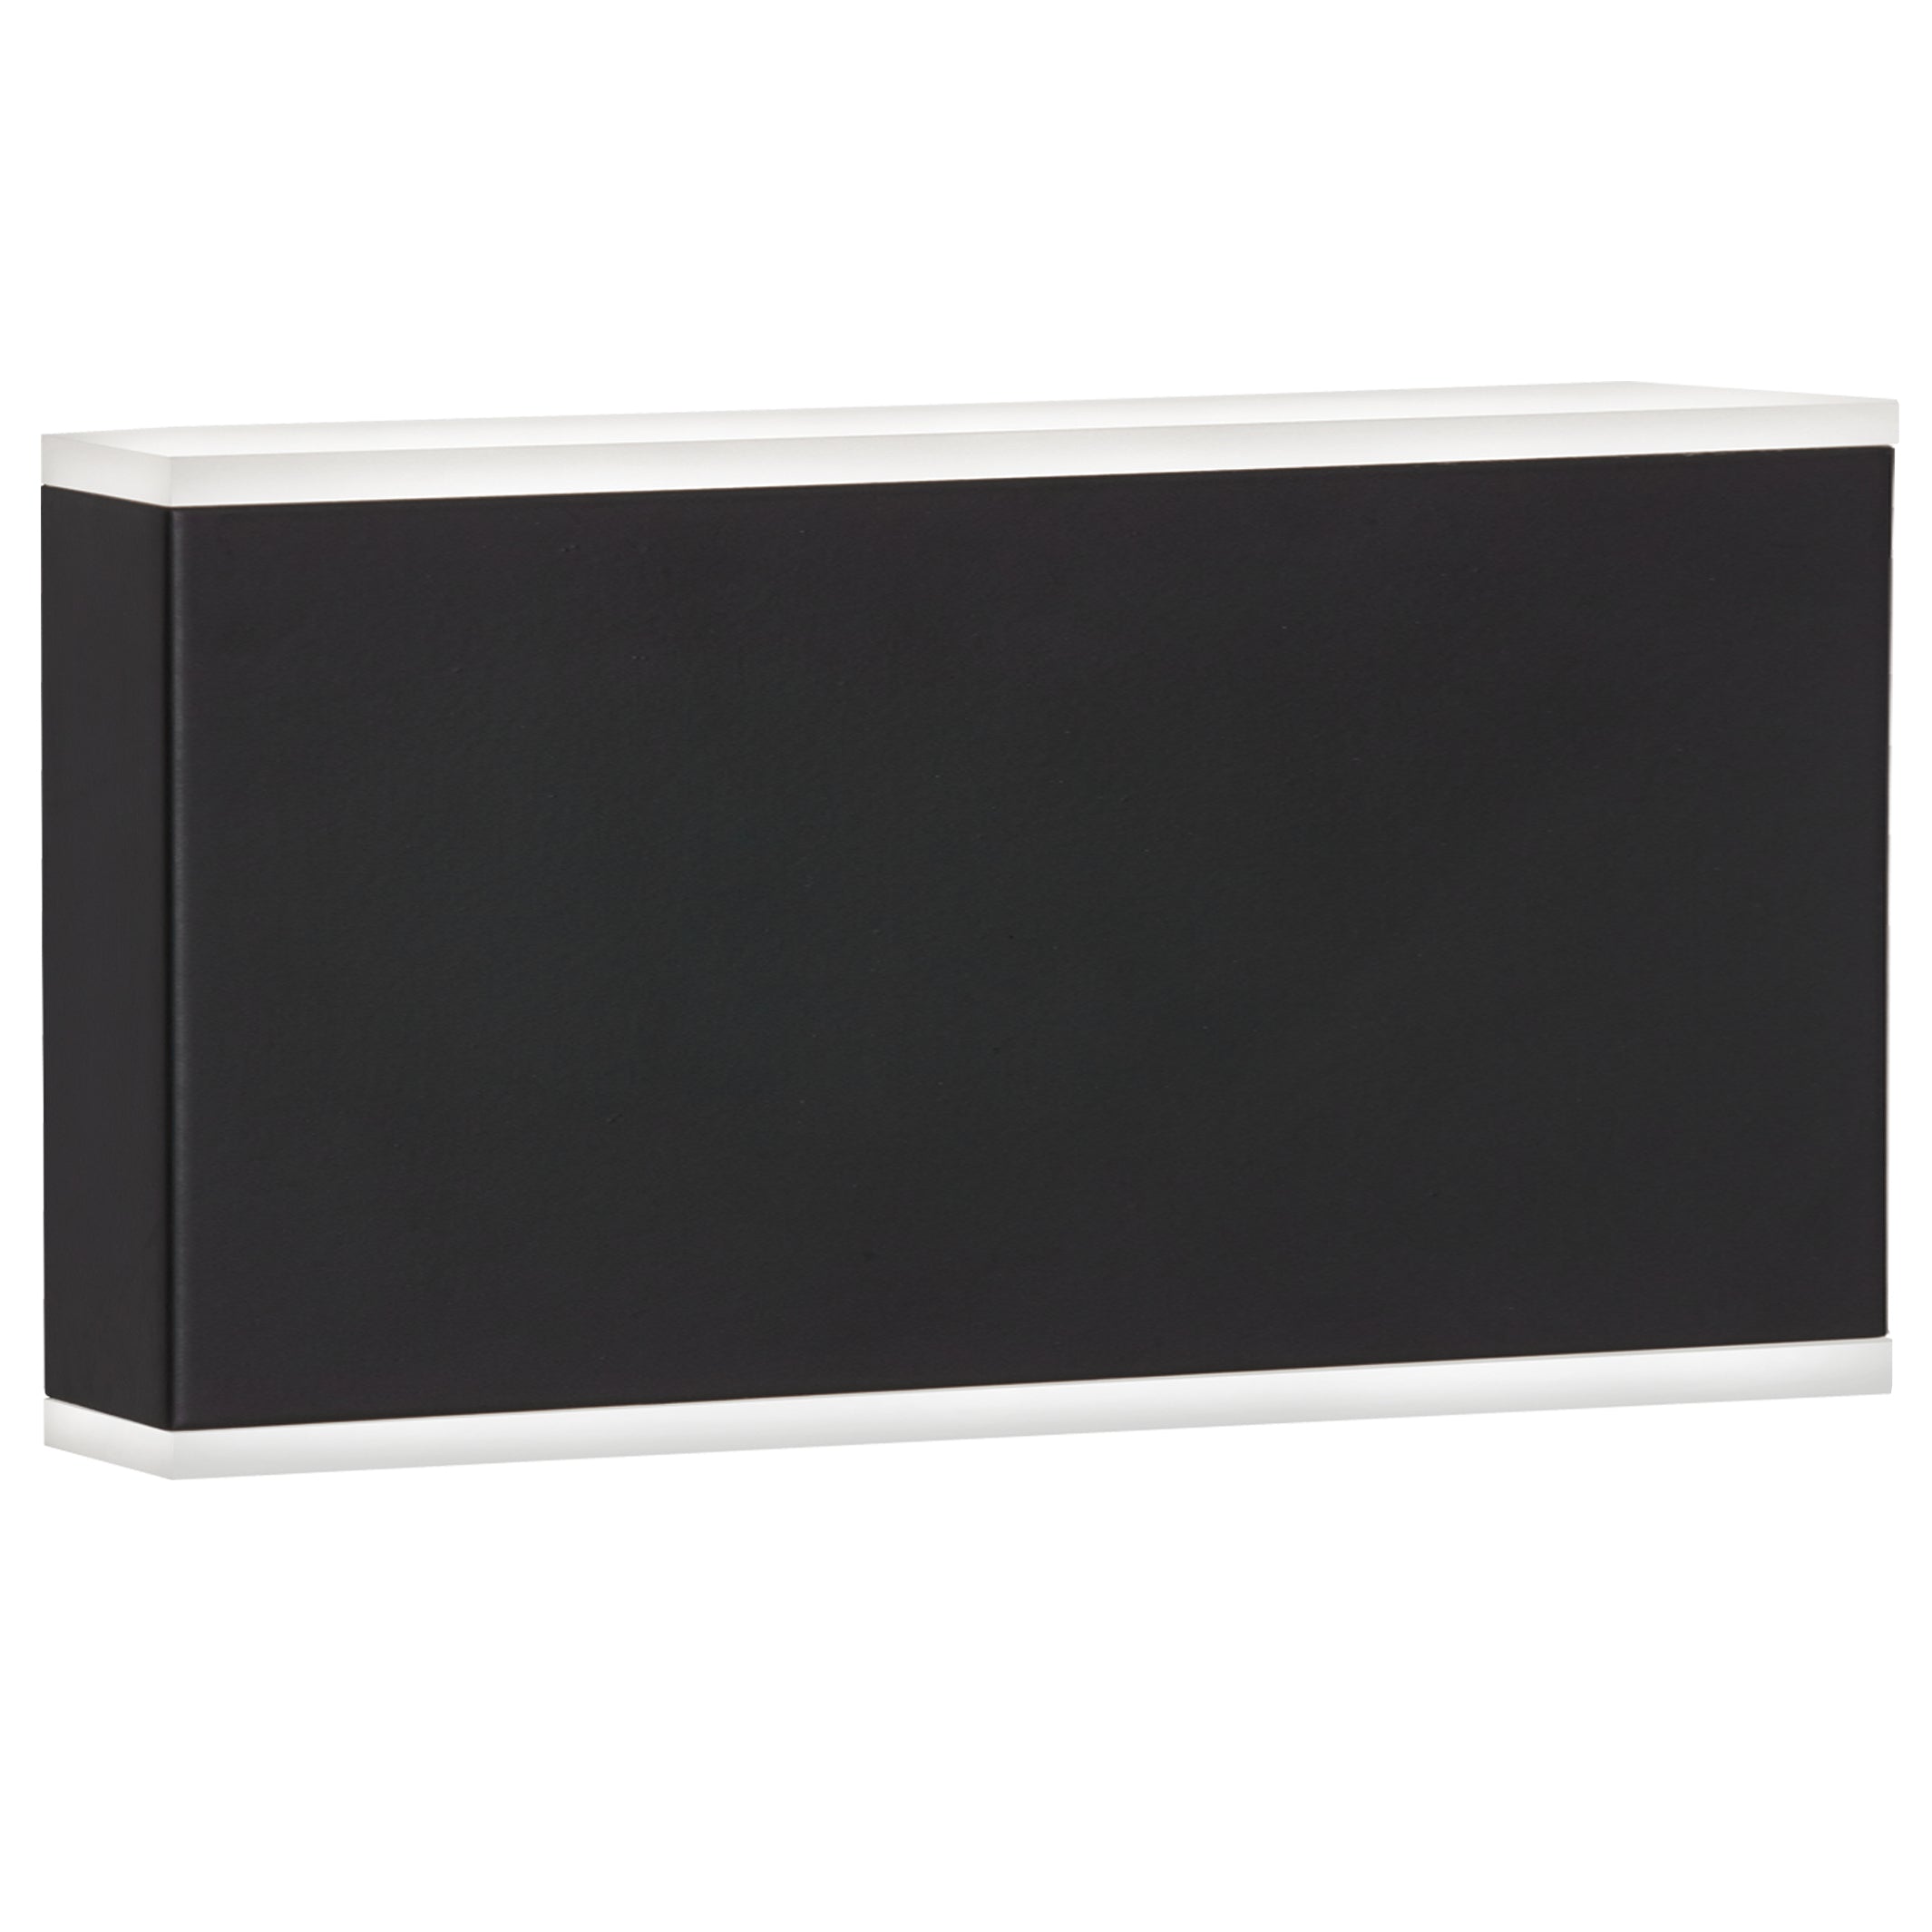 EMERY Wall sconce Black INTEGRATED LED - EMY-105-20W-MB | DAINOLITE